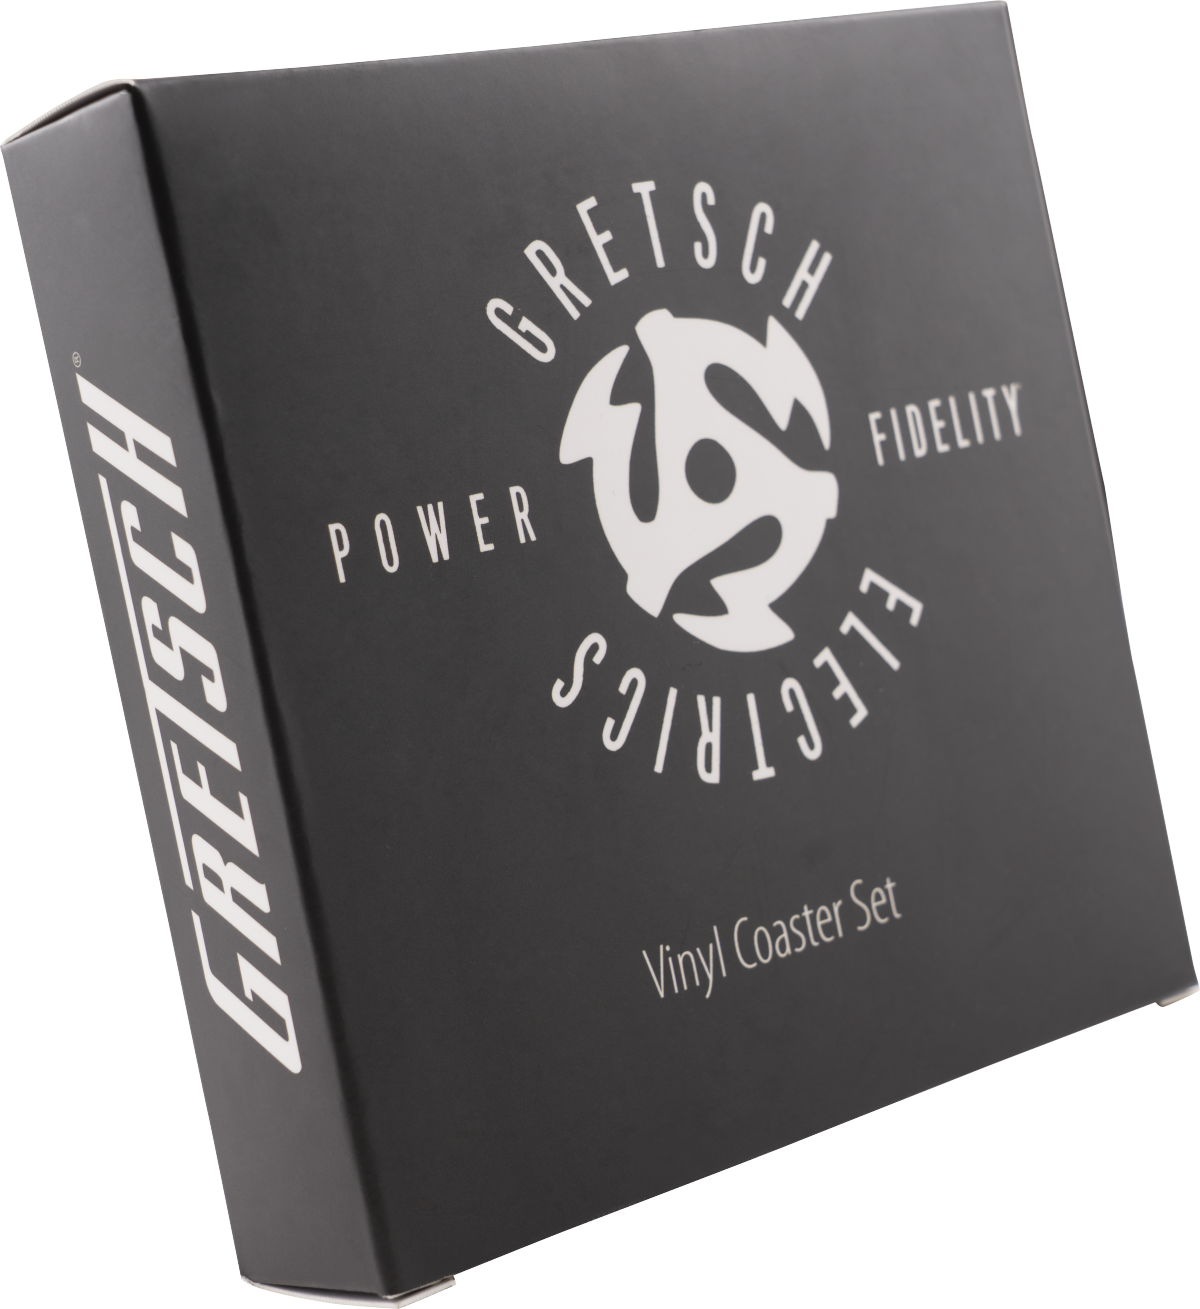 Gretsch Power & Fidelity Vinyl Coaster Set - Viltje - Variation 3